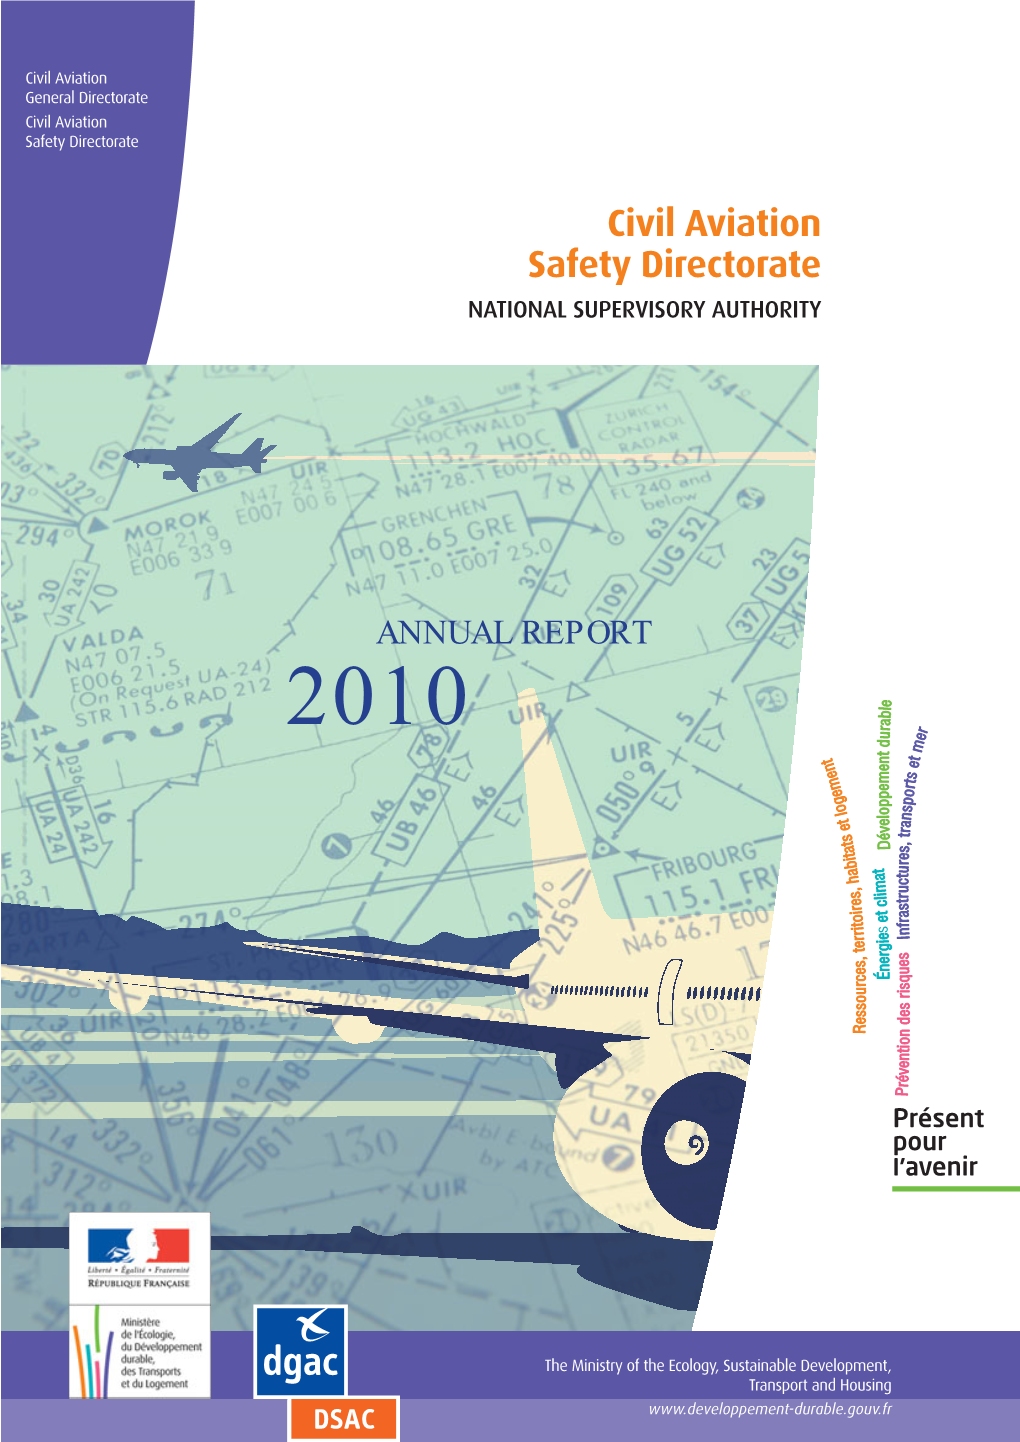 Civil Aviation Safety Directorate